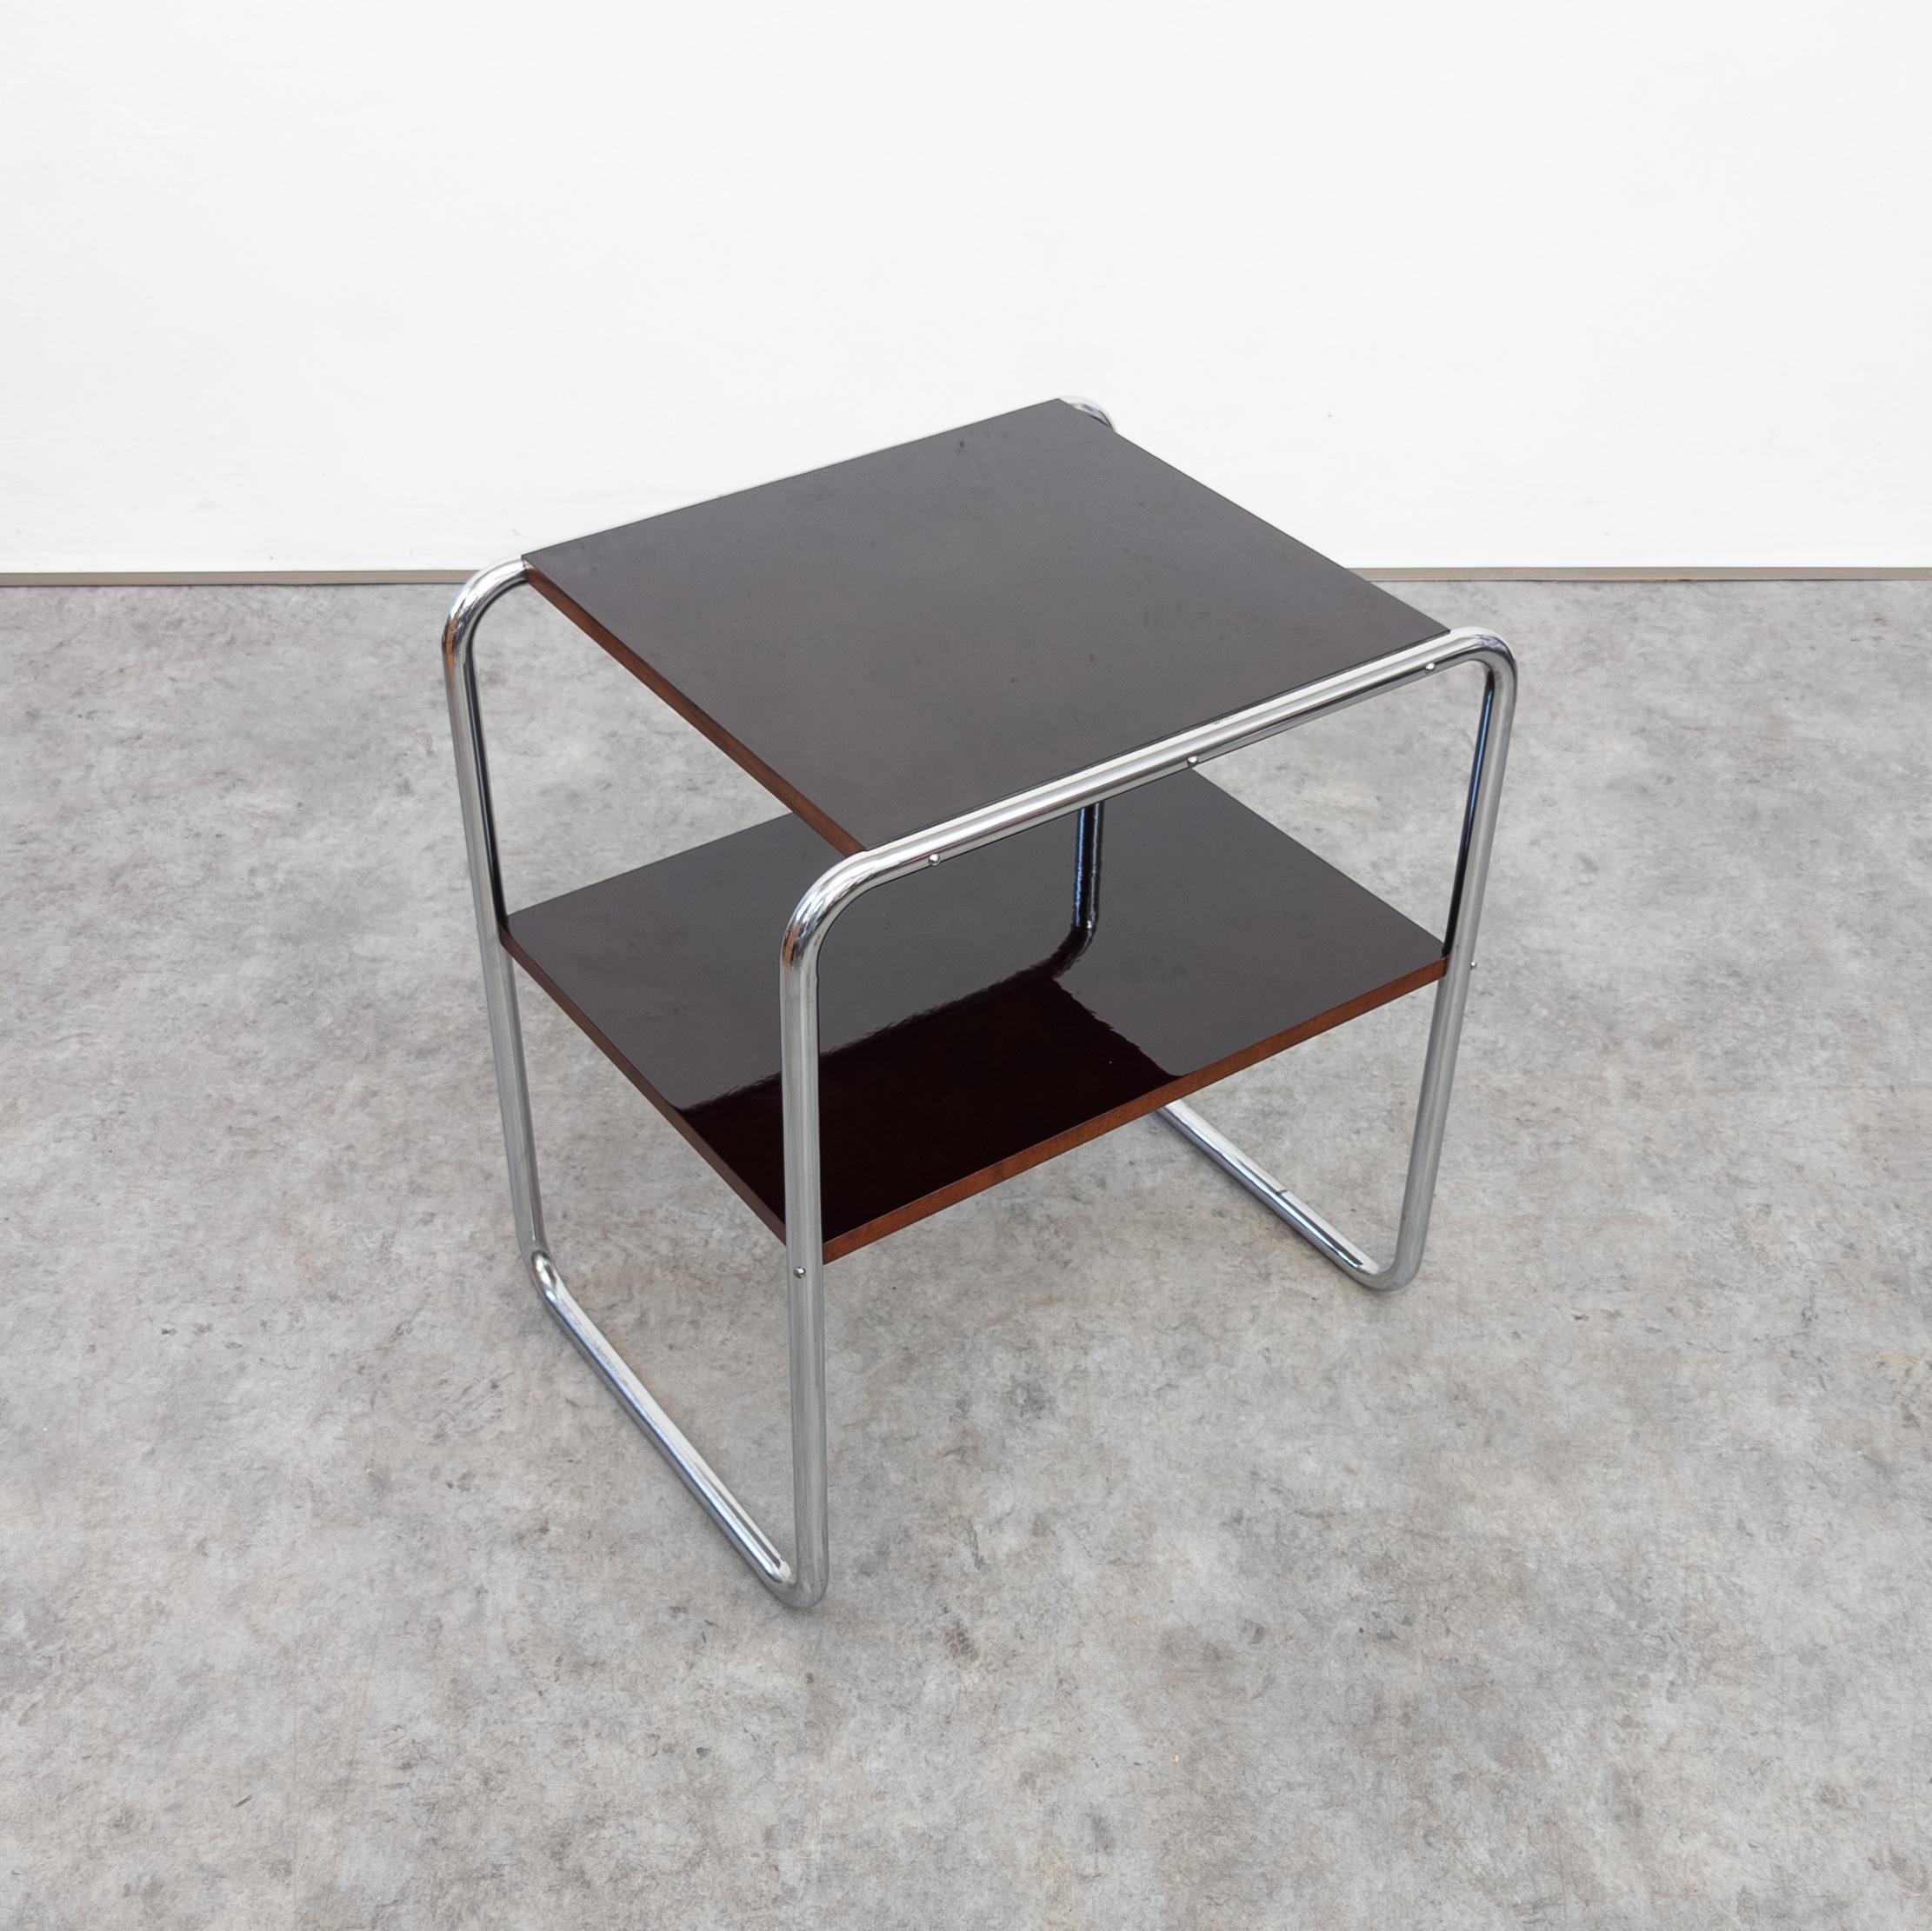 Rare restored Bauhaus tubular steel side table by Marcel Breuer  For Sale 1